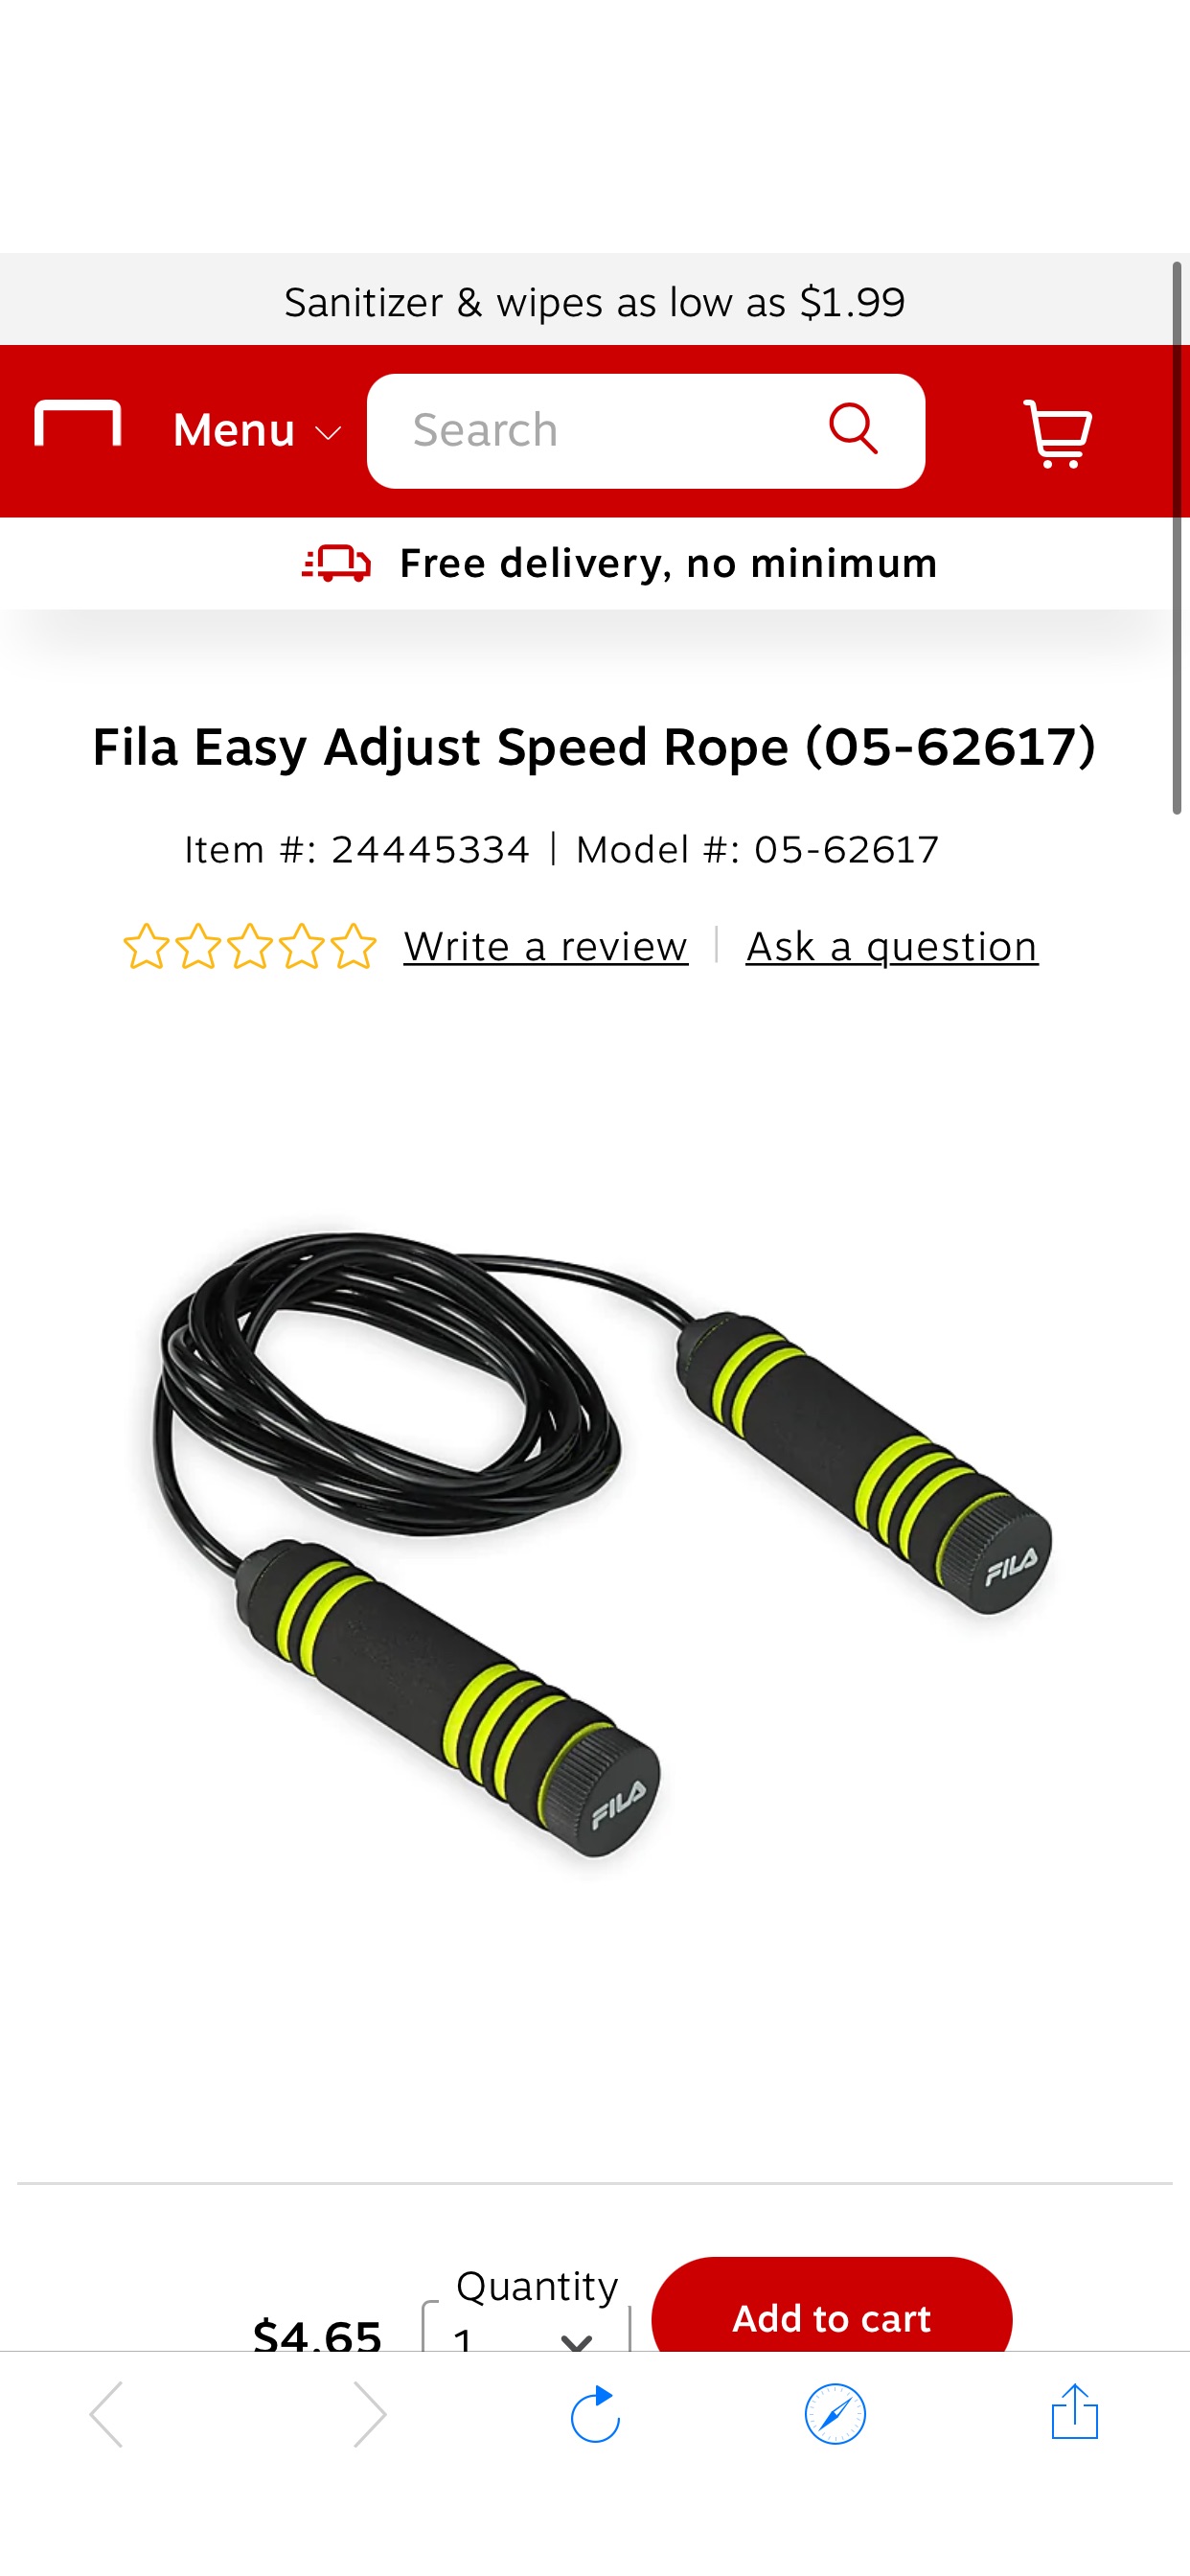 Fila Easy Adjust Speed跳绳 Rope (05-62617) at Staples